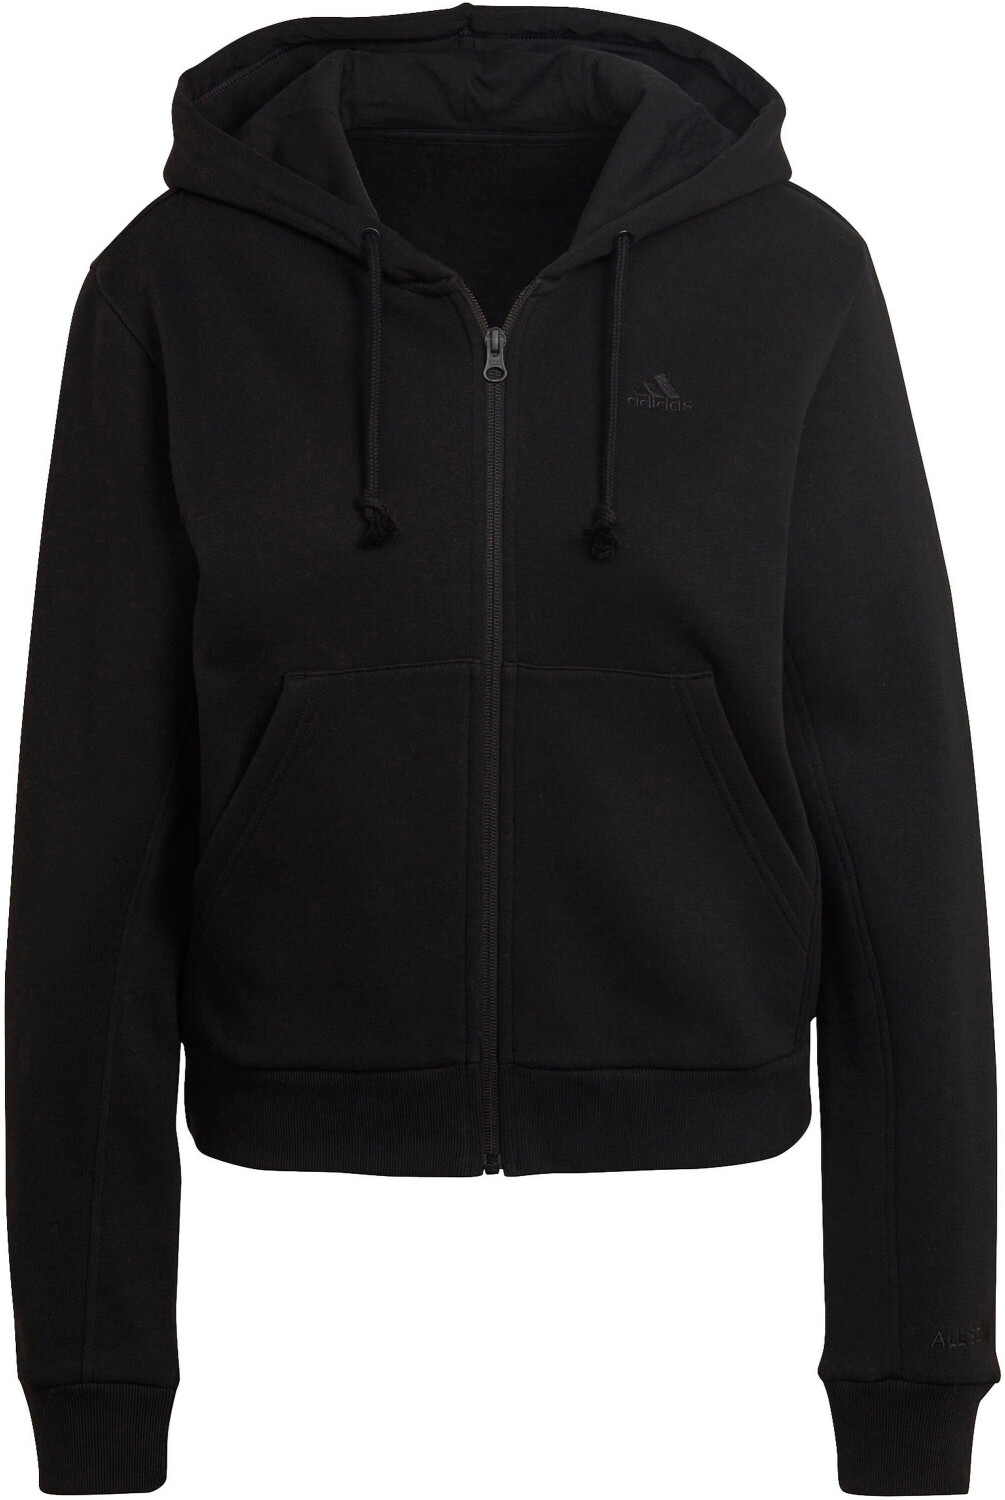 Adidas All Szn Sweatjacket 34,95 bei black (HC8848) | Preisvergleich ab €